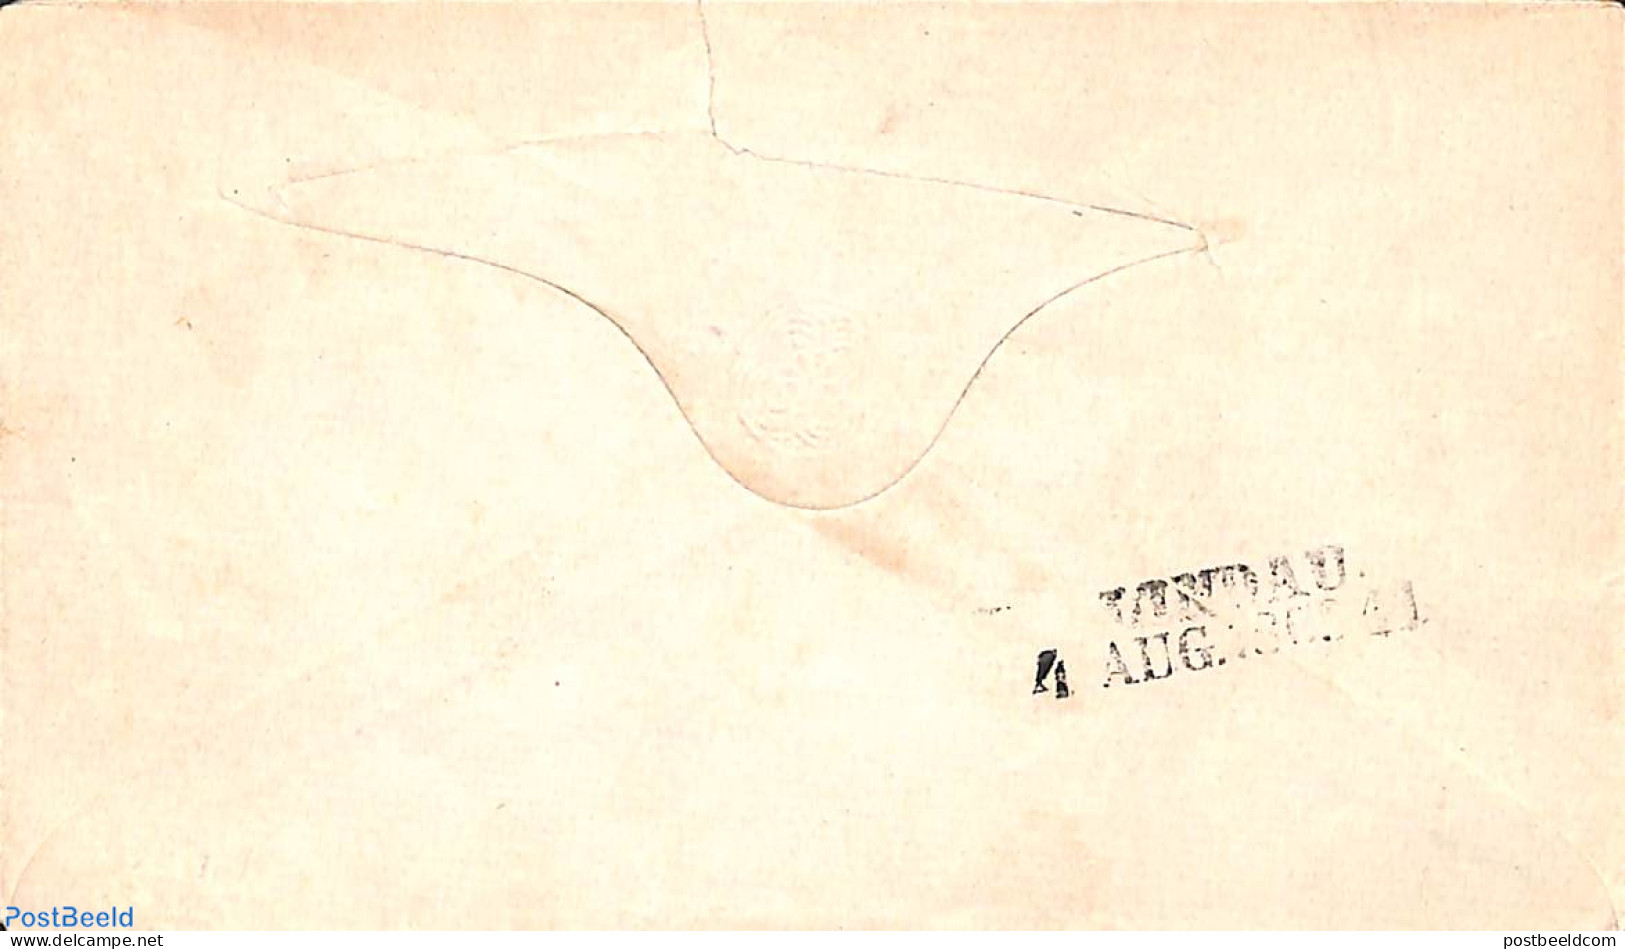 Switzerland 1869 Envelop 25c From WALLISELLE To LINDAU, Used Postal Stationary - Lettres & Documents